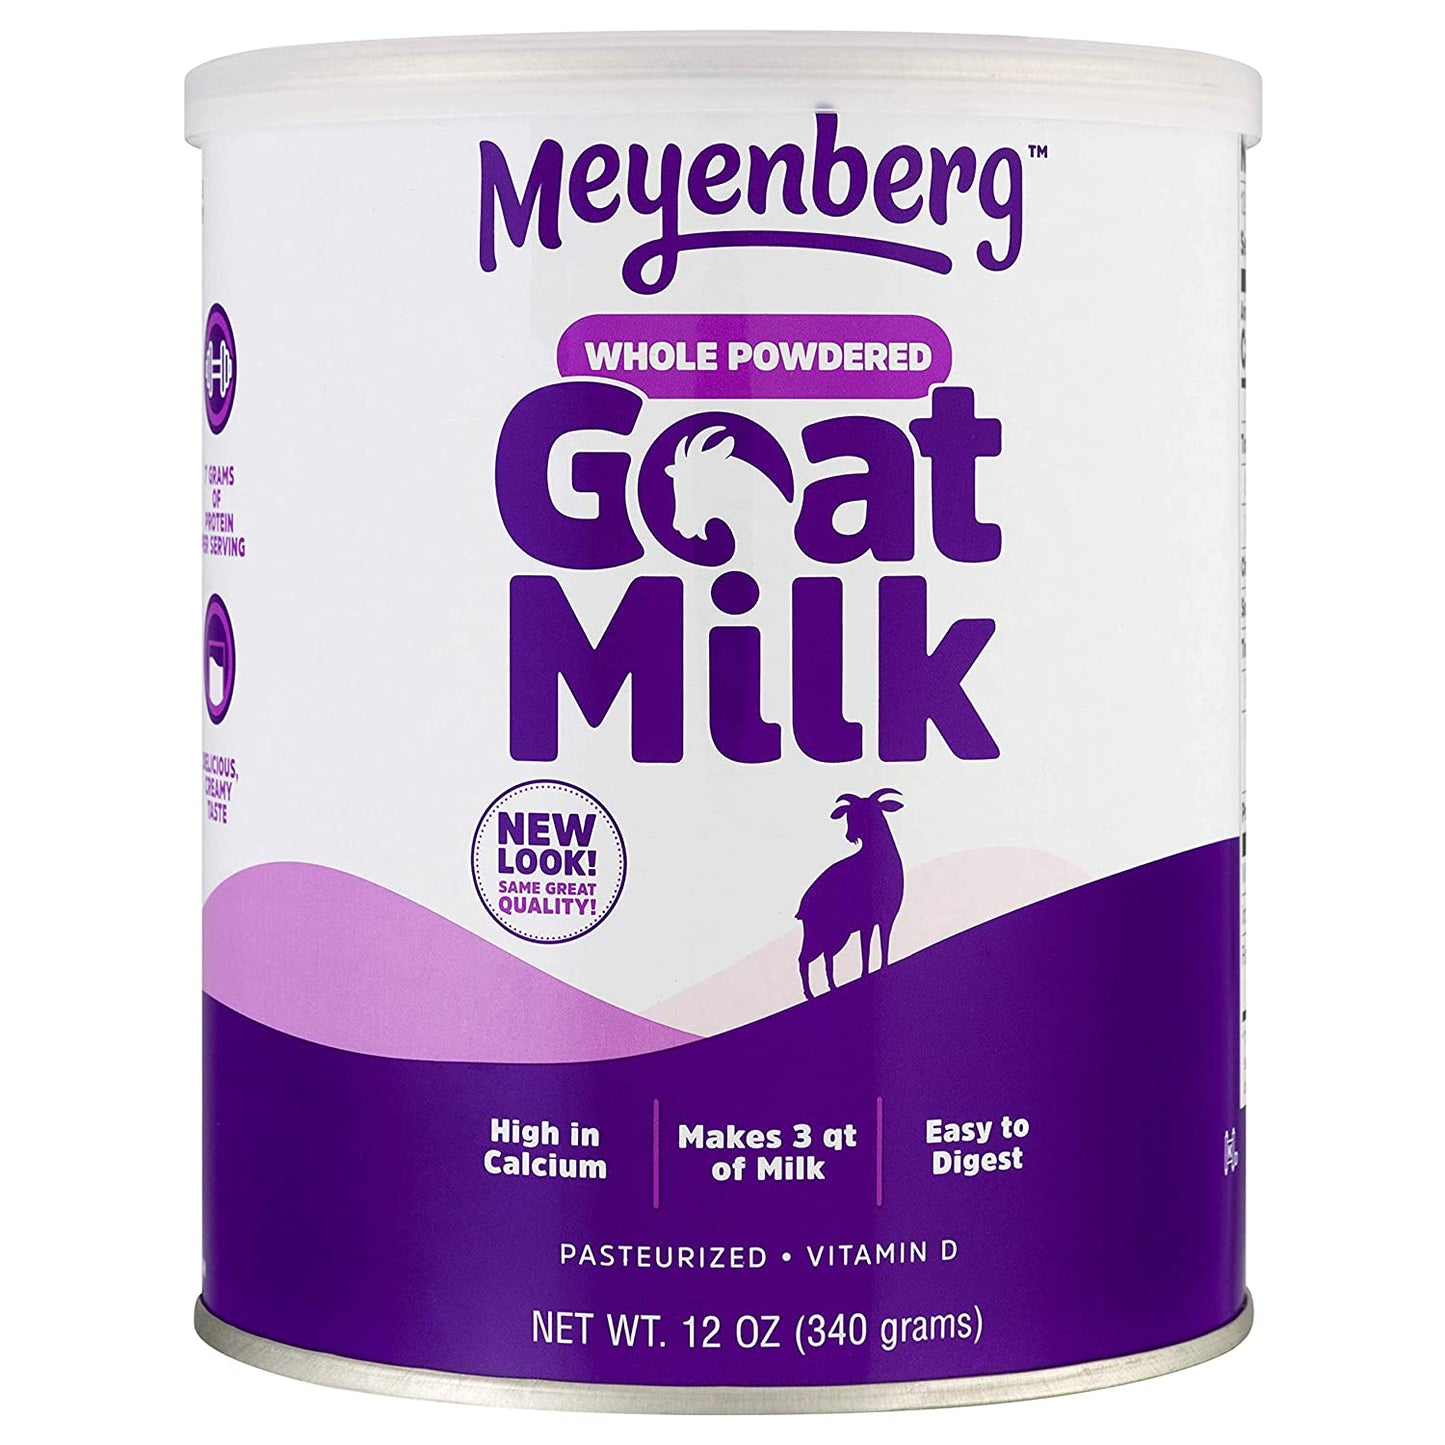 Meyenberg Whole Powdered Goat Milk, 12 oz. / 340g Gluten Free, Non-GMO, Vitamin D